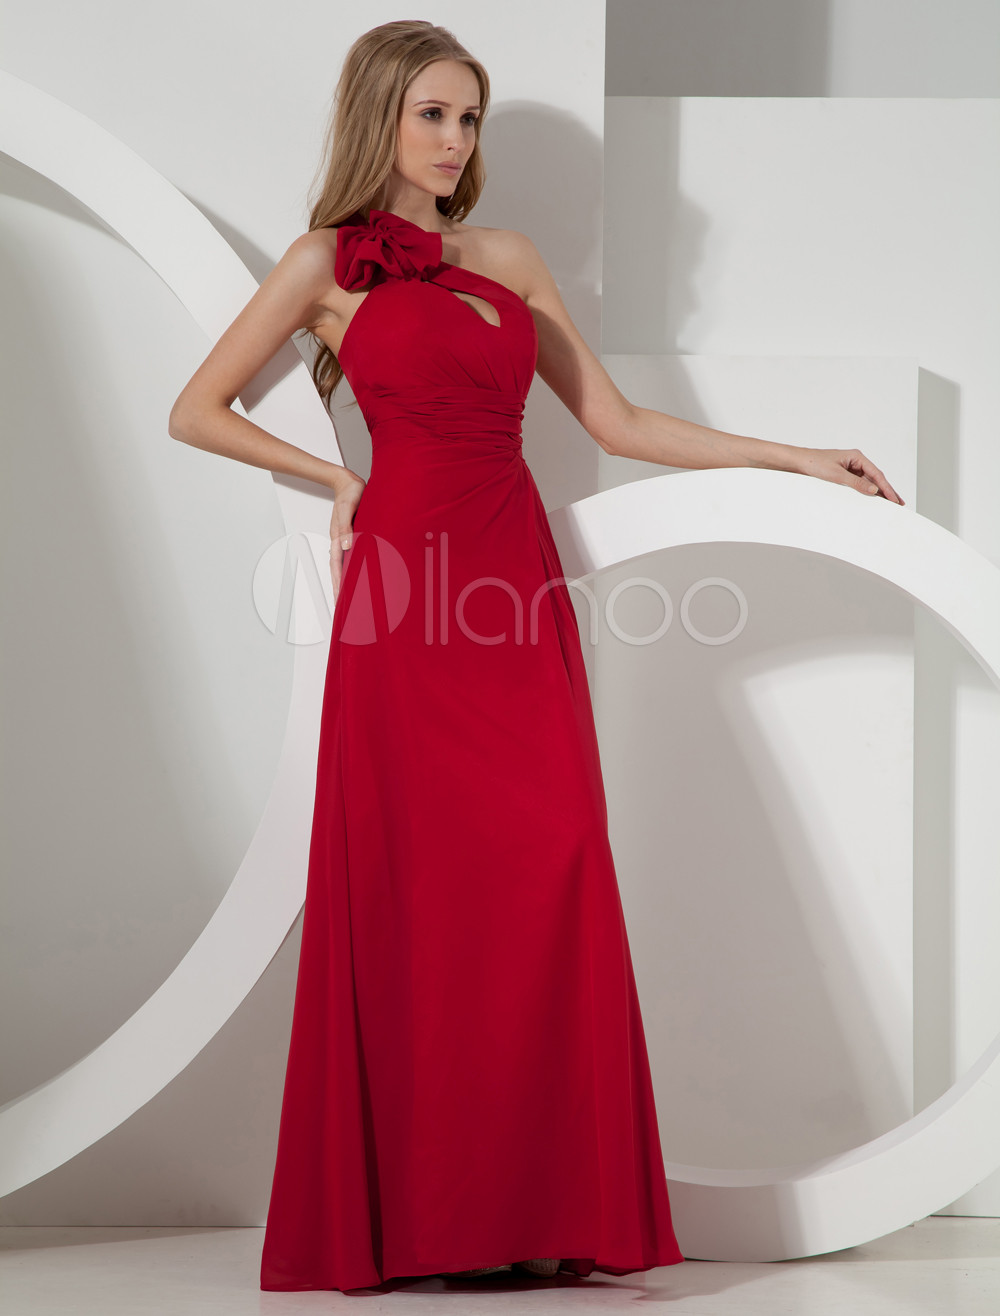 Red One-Shoulder Bow Chiffon Woman's Prom Dress - Milanoo.com